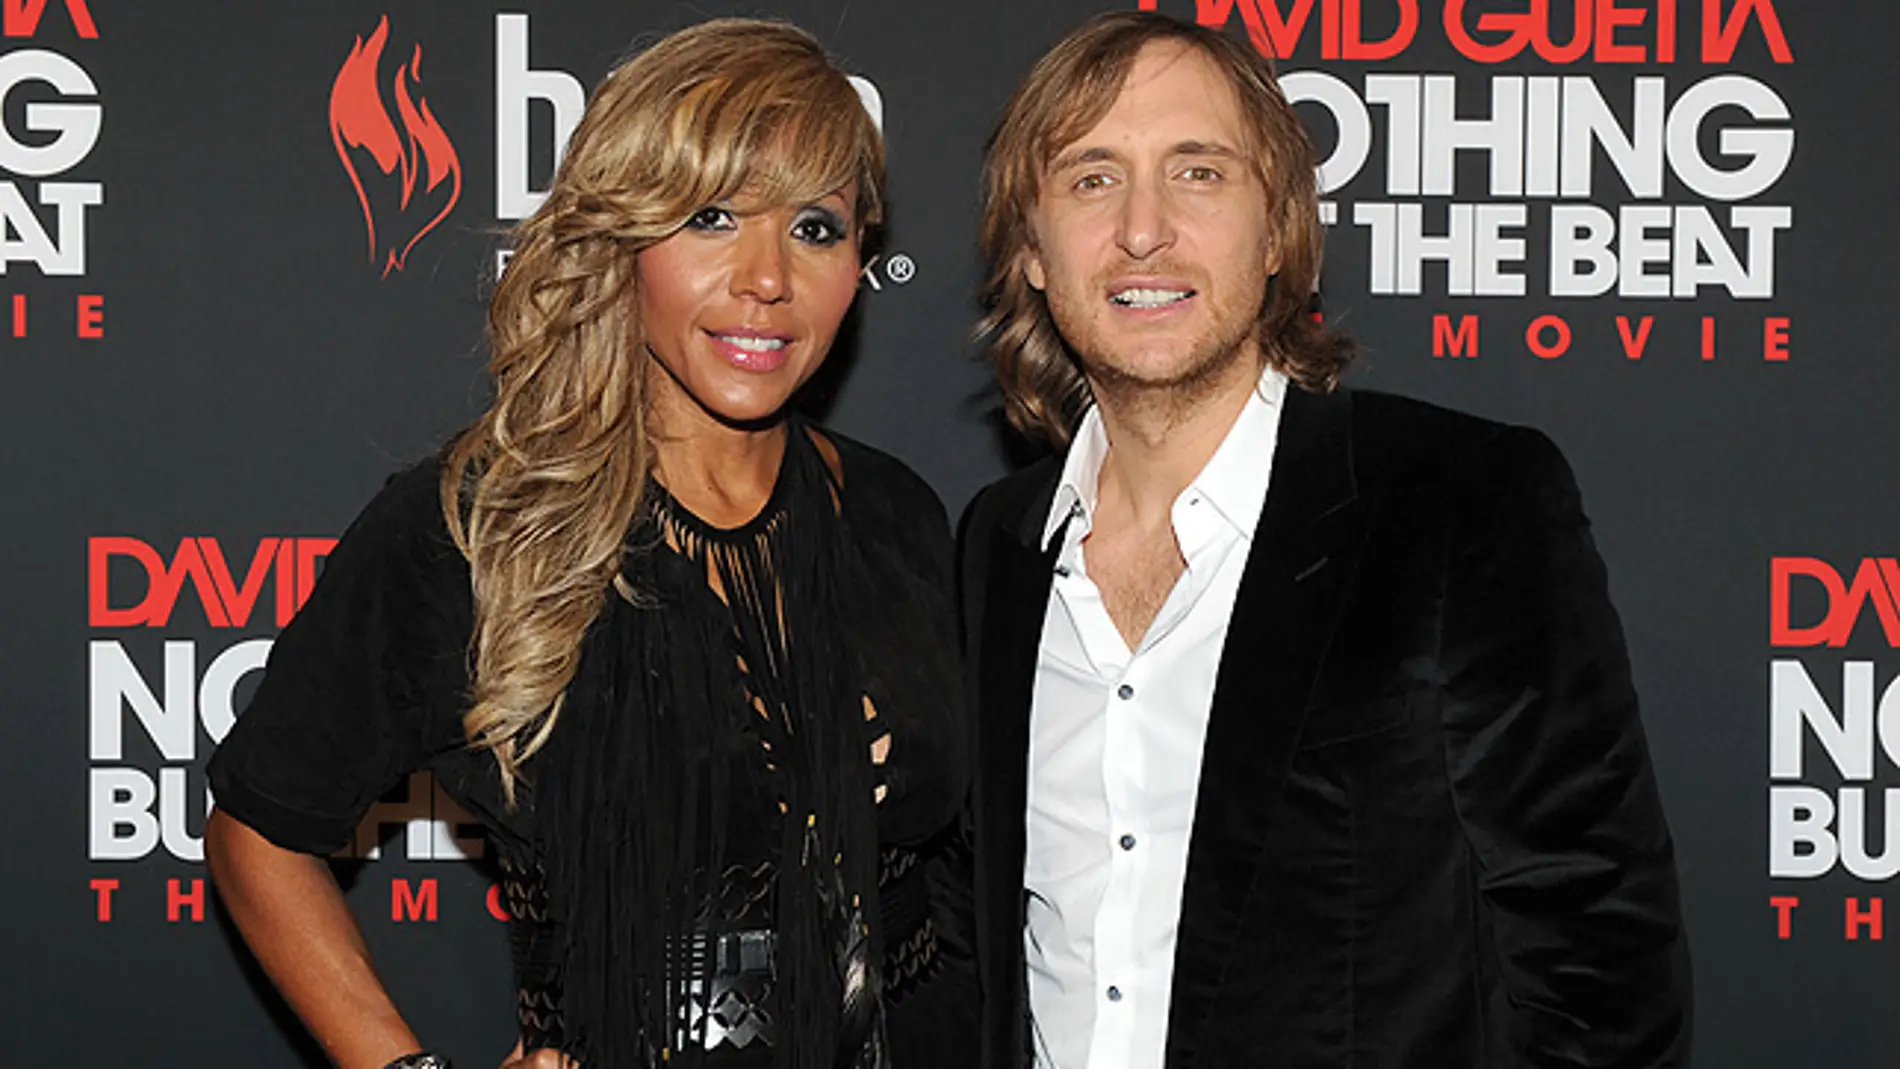 David Guetta junto a su esposa Cathy